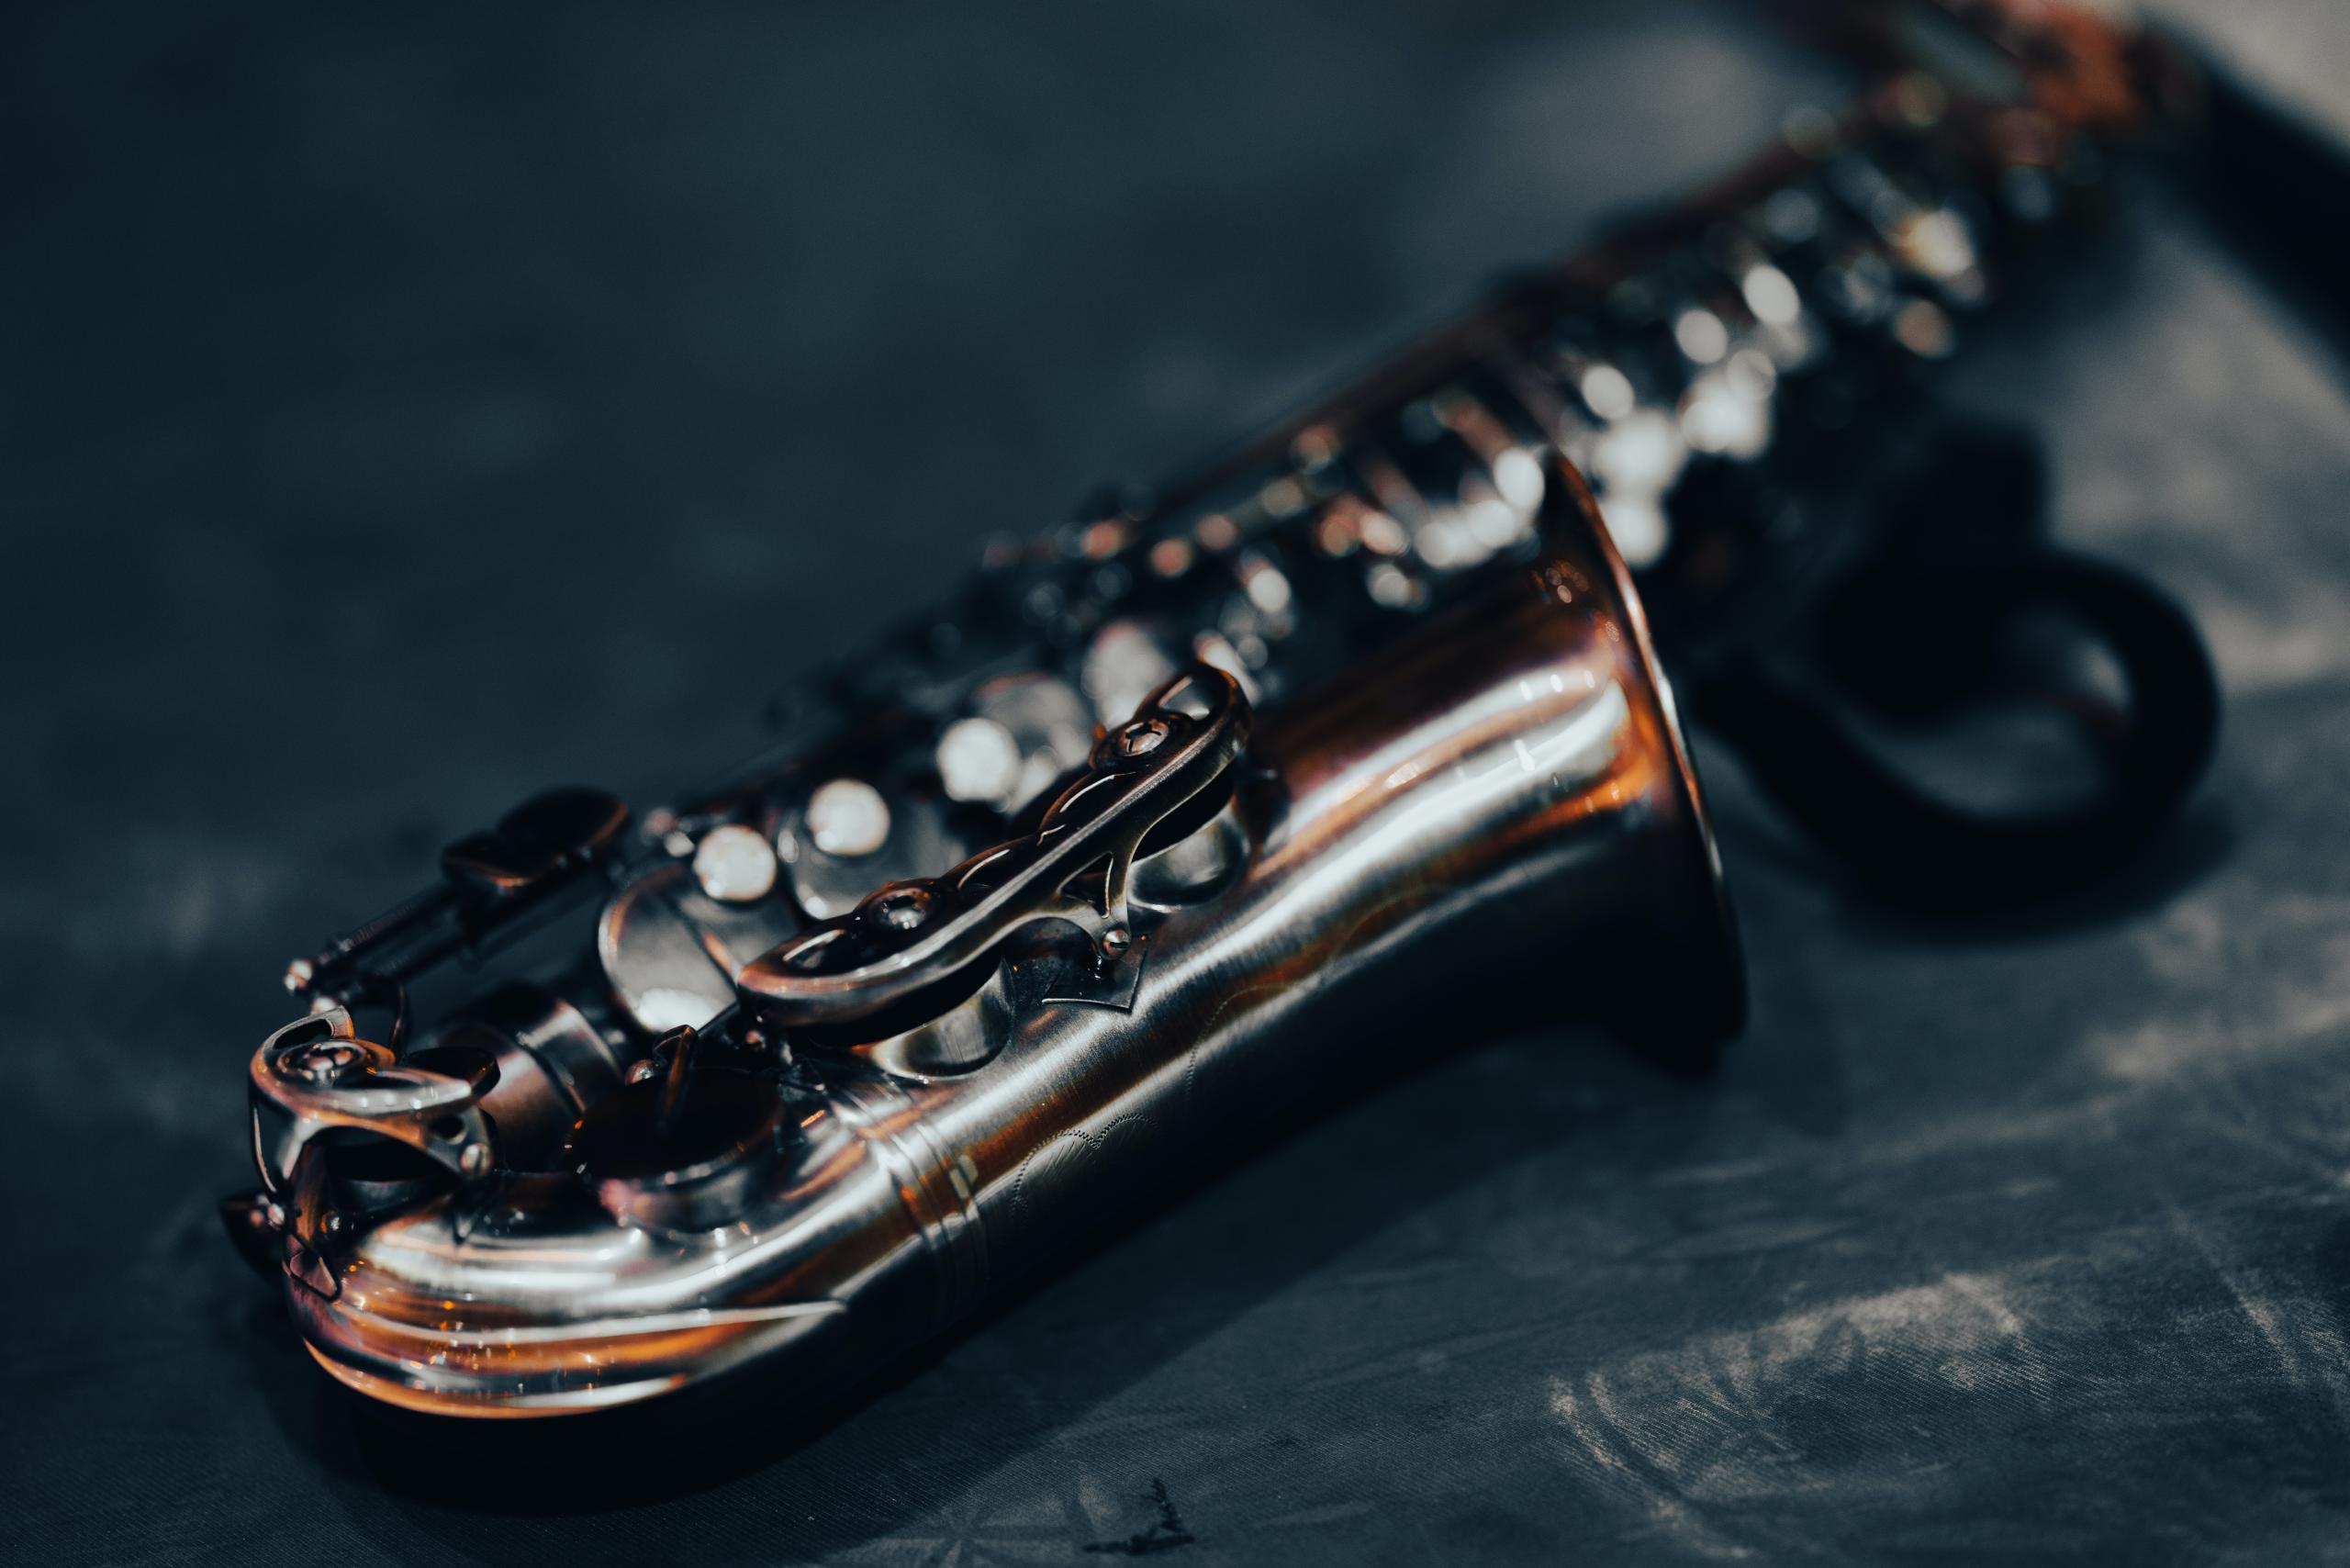 An alto saxophone lies on a dark floor